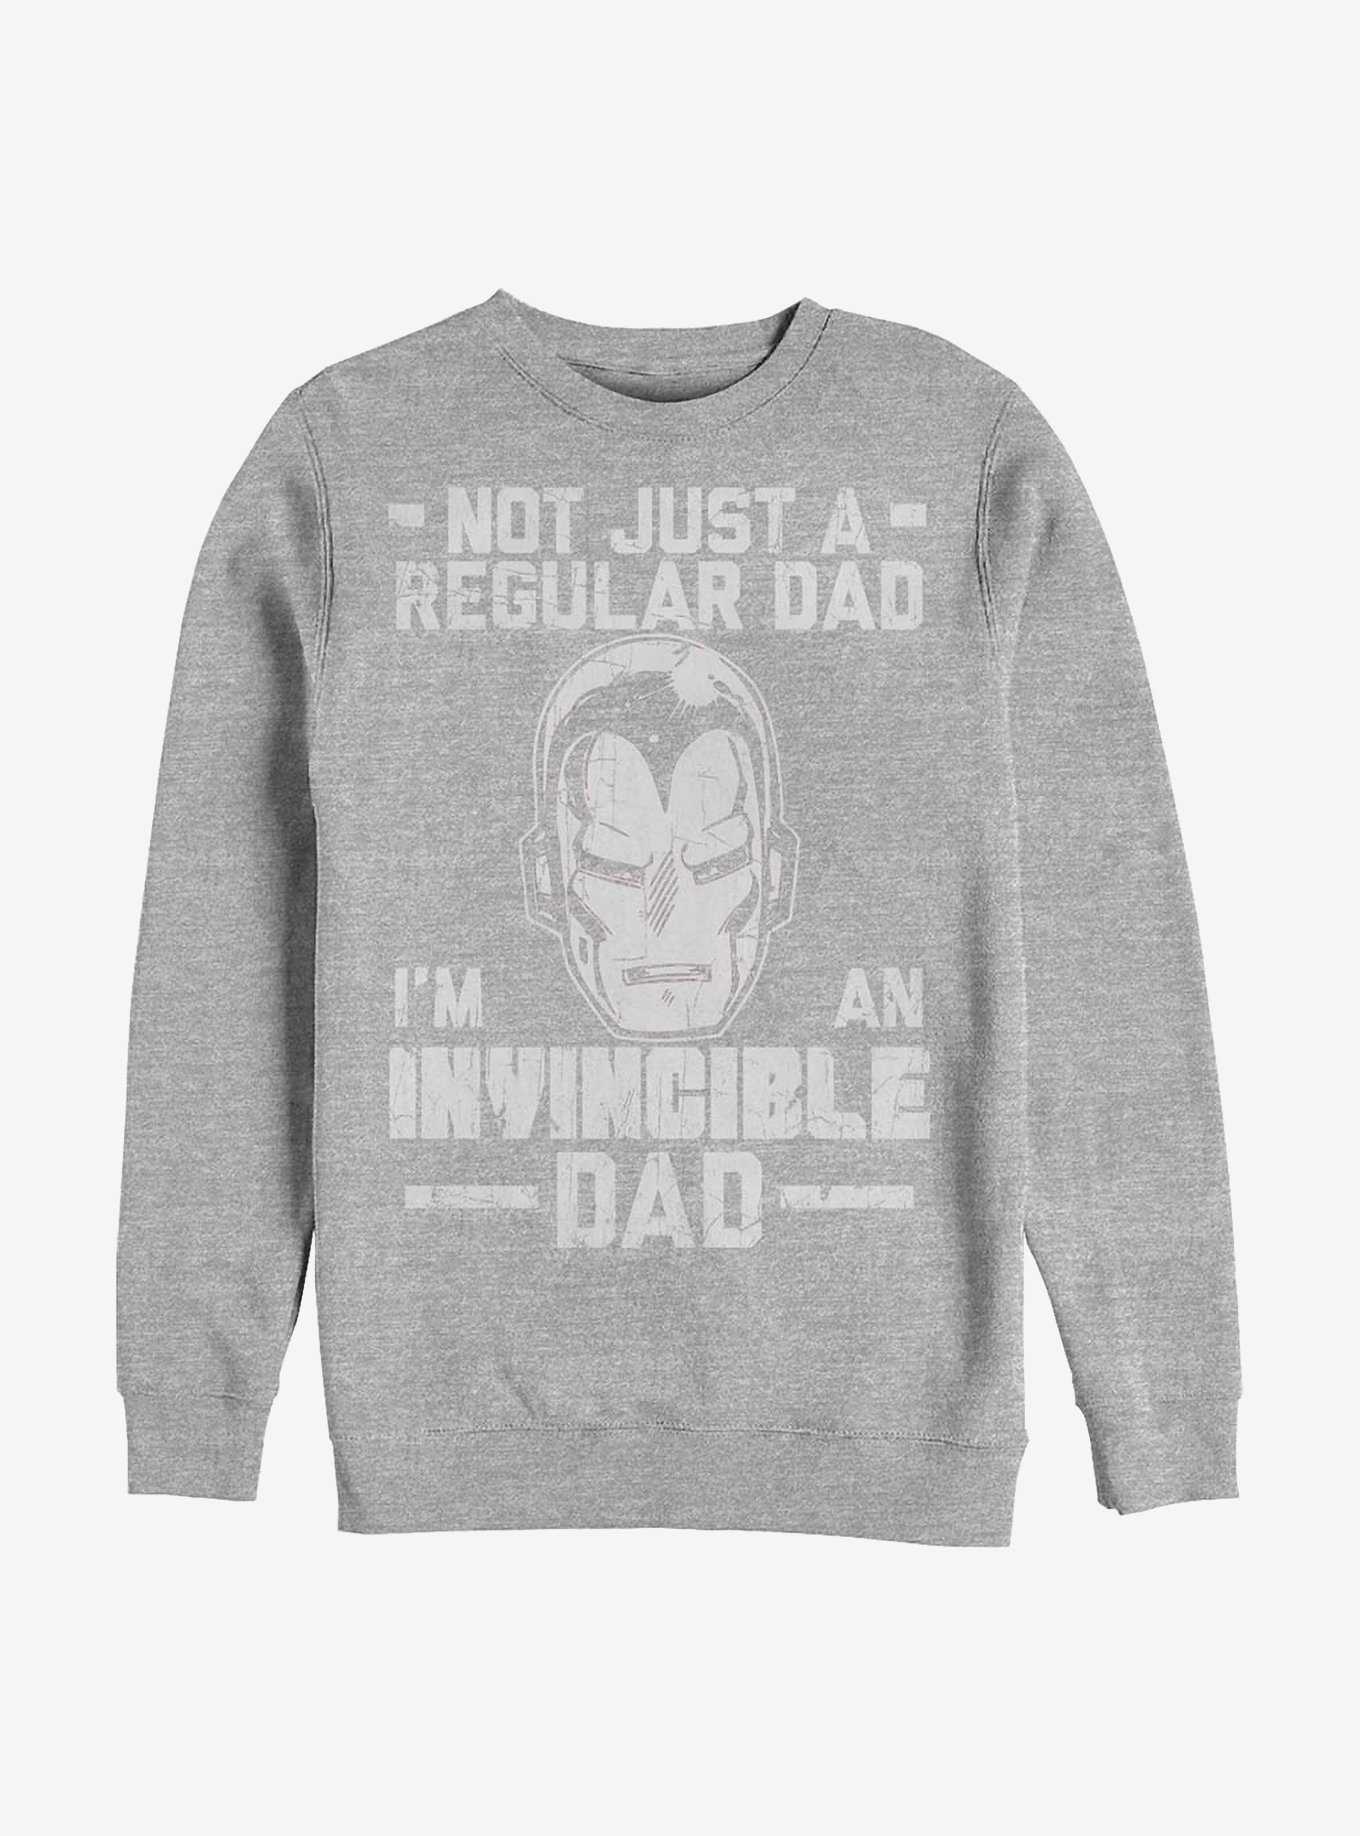 Marvel Iron Man Invincible Dad Crew Sweatshirt, , hi-res